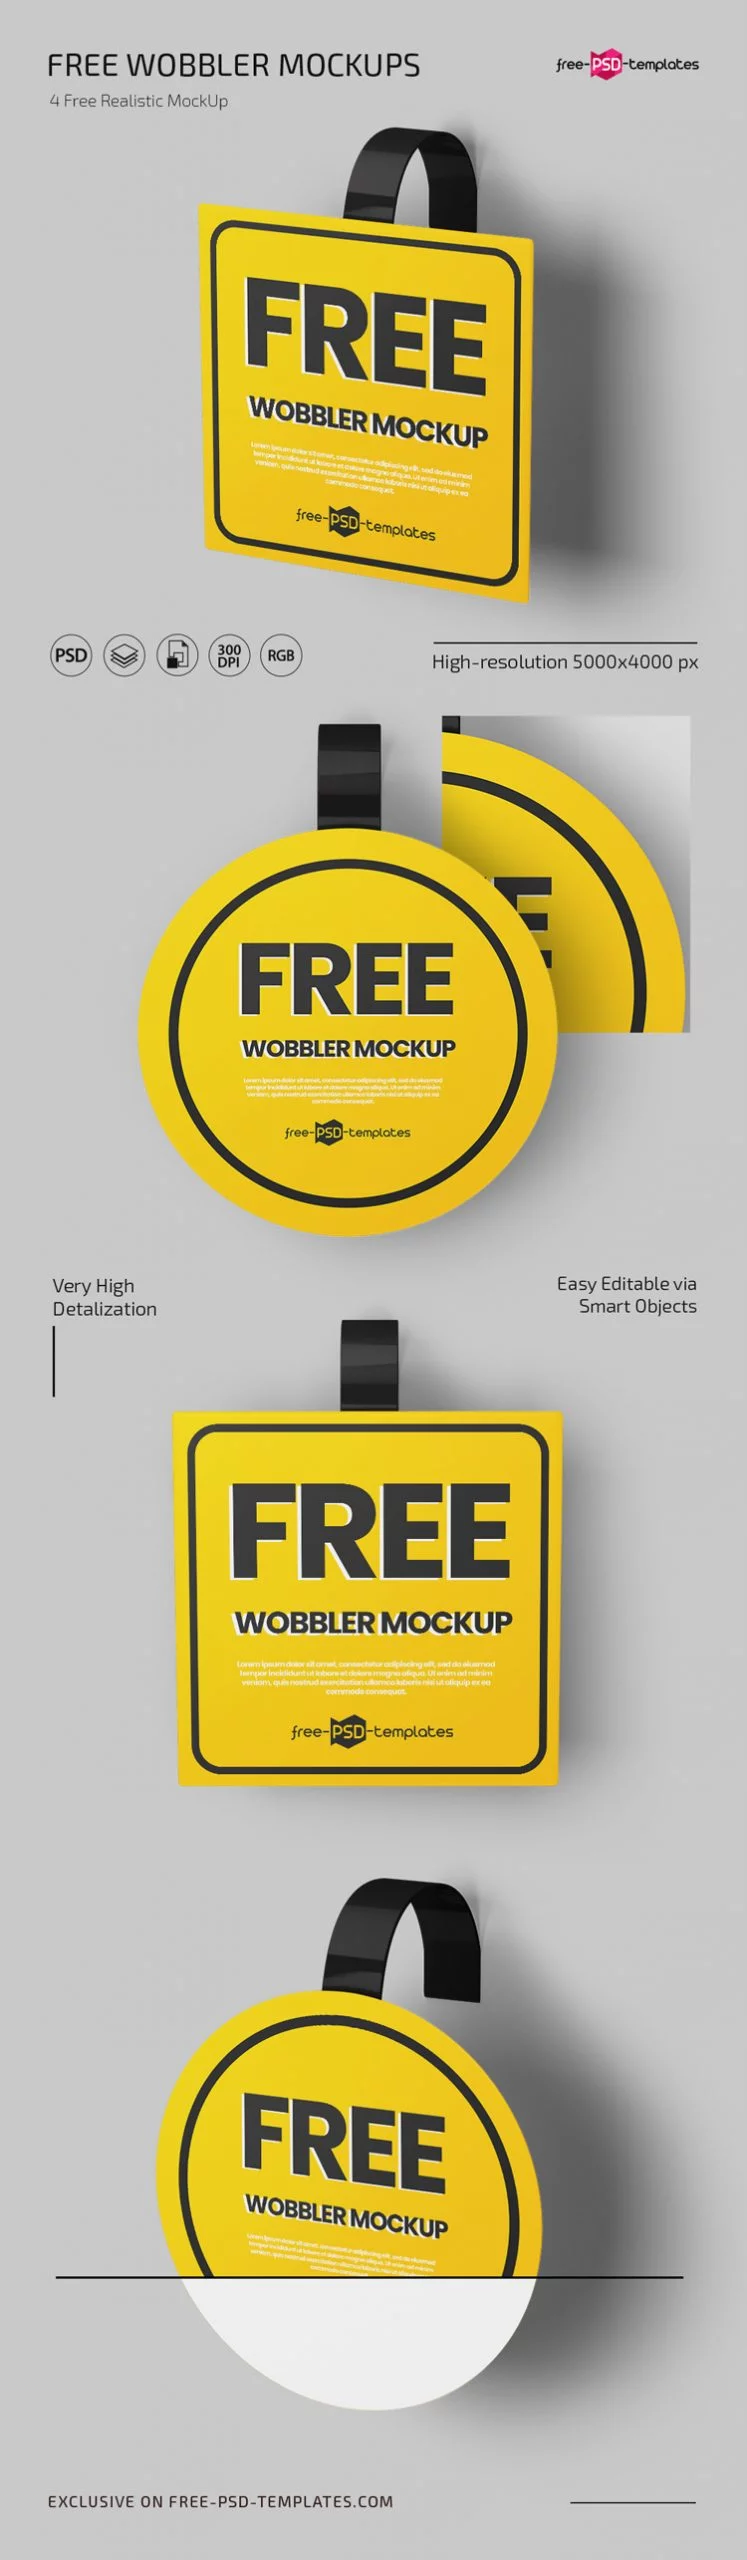 Free Wobbler Mockups in PSD